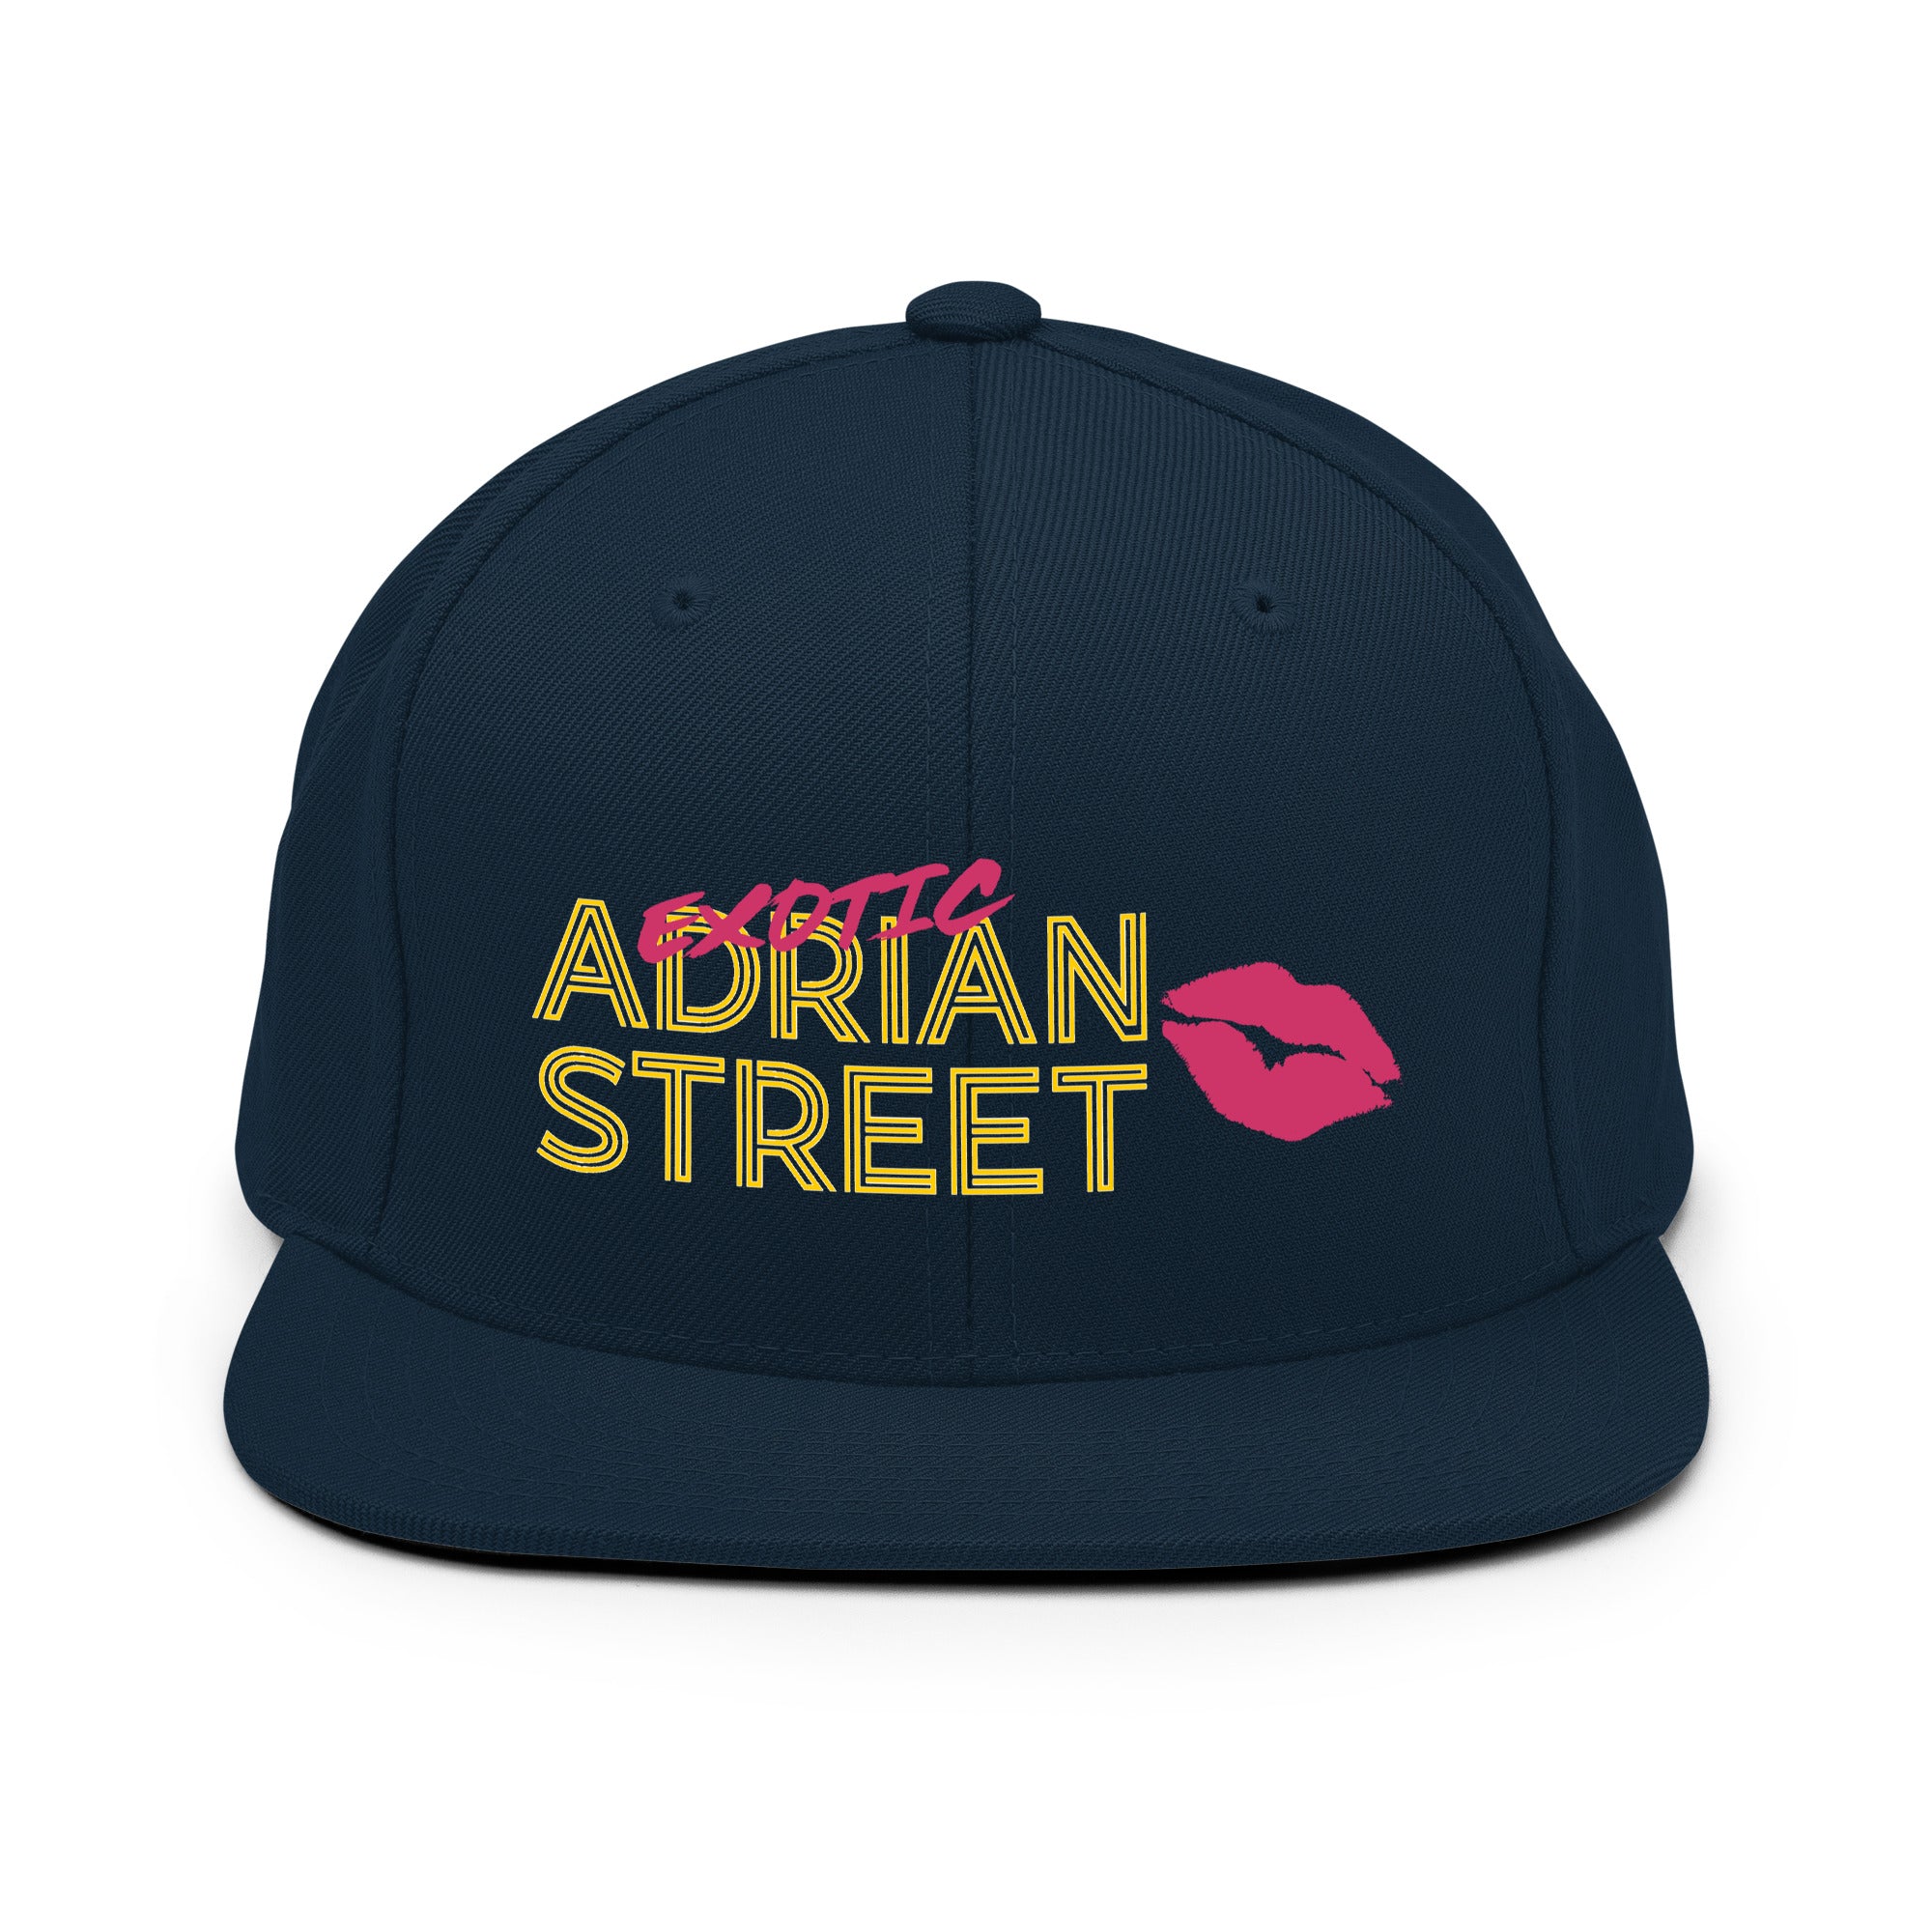 Adrian Street Logo Snapback Hat